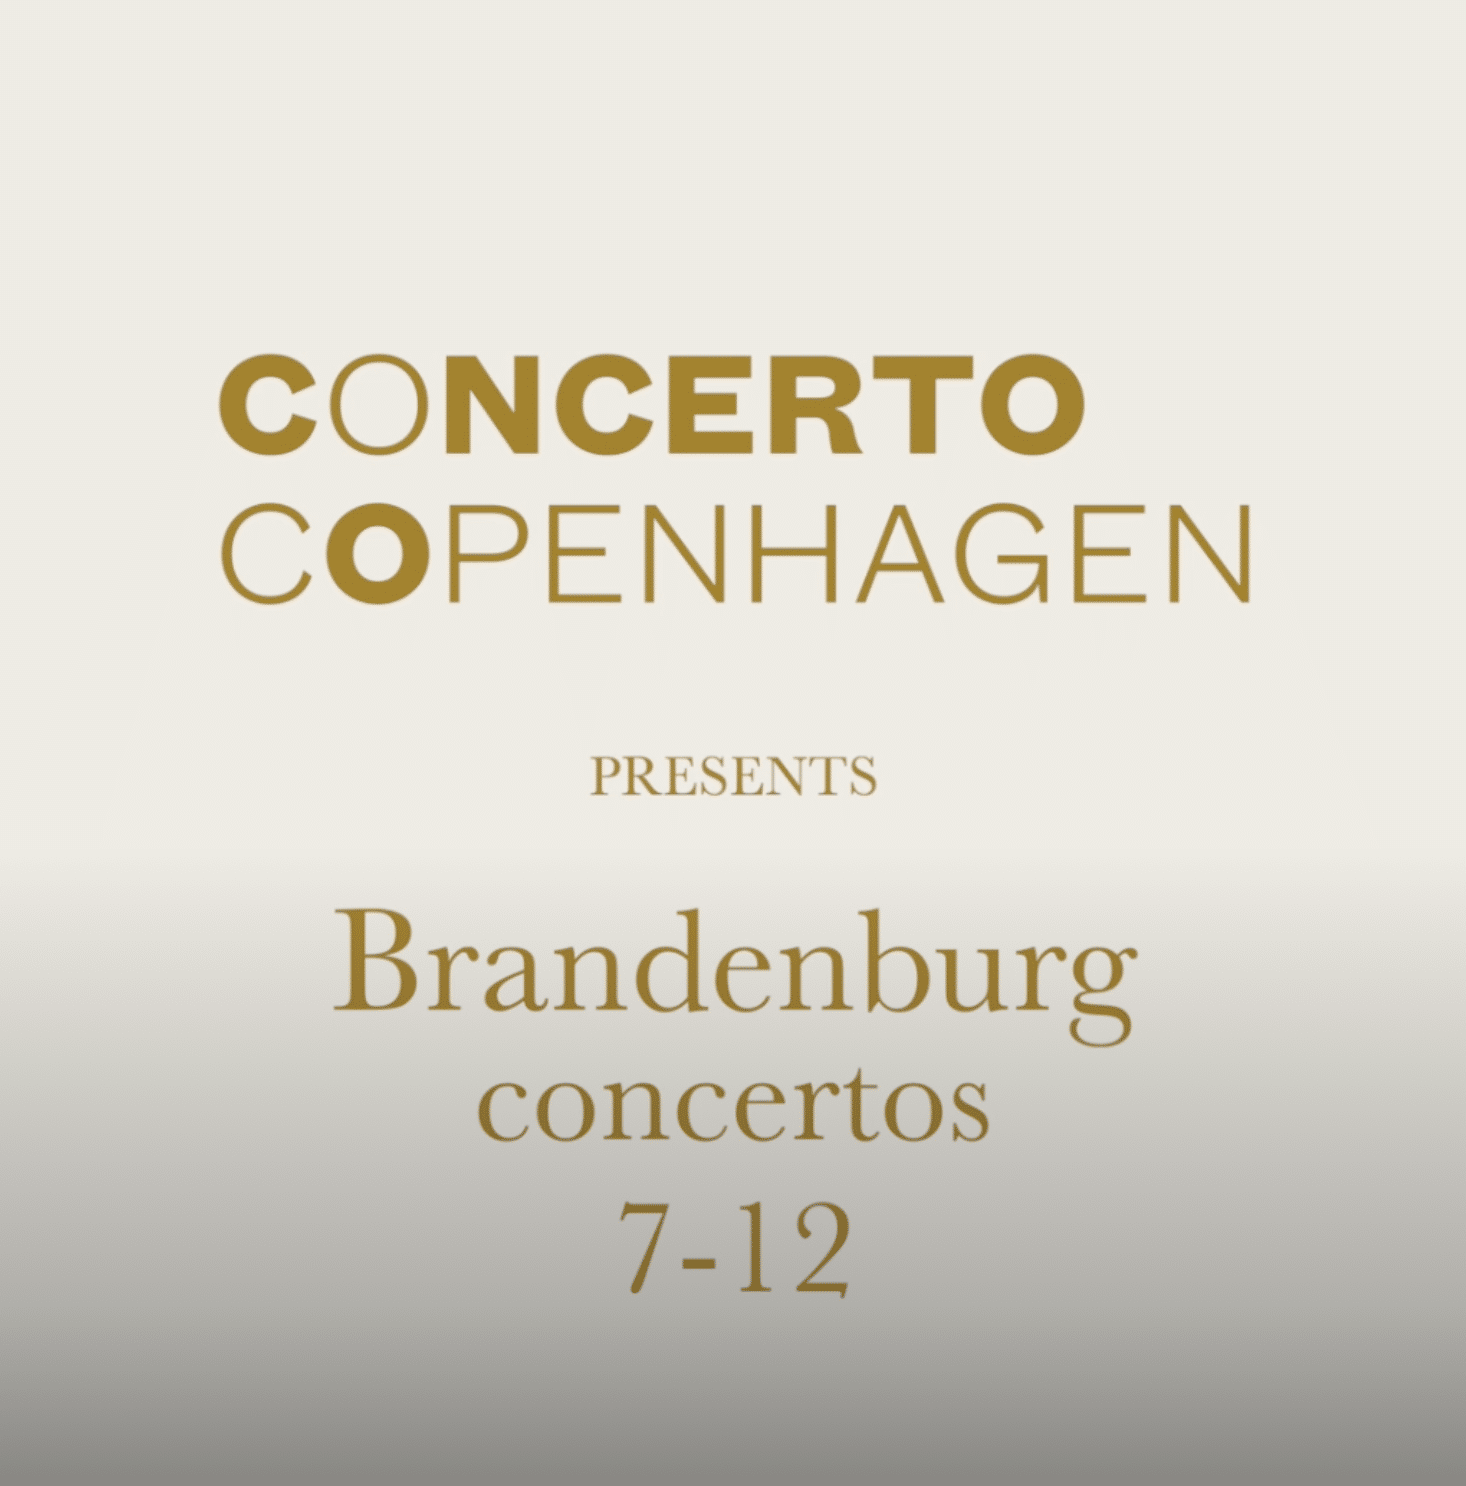 Brandenburg Concertos 7-12, concerto copenhagen